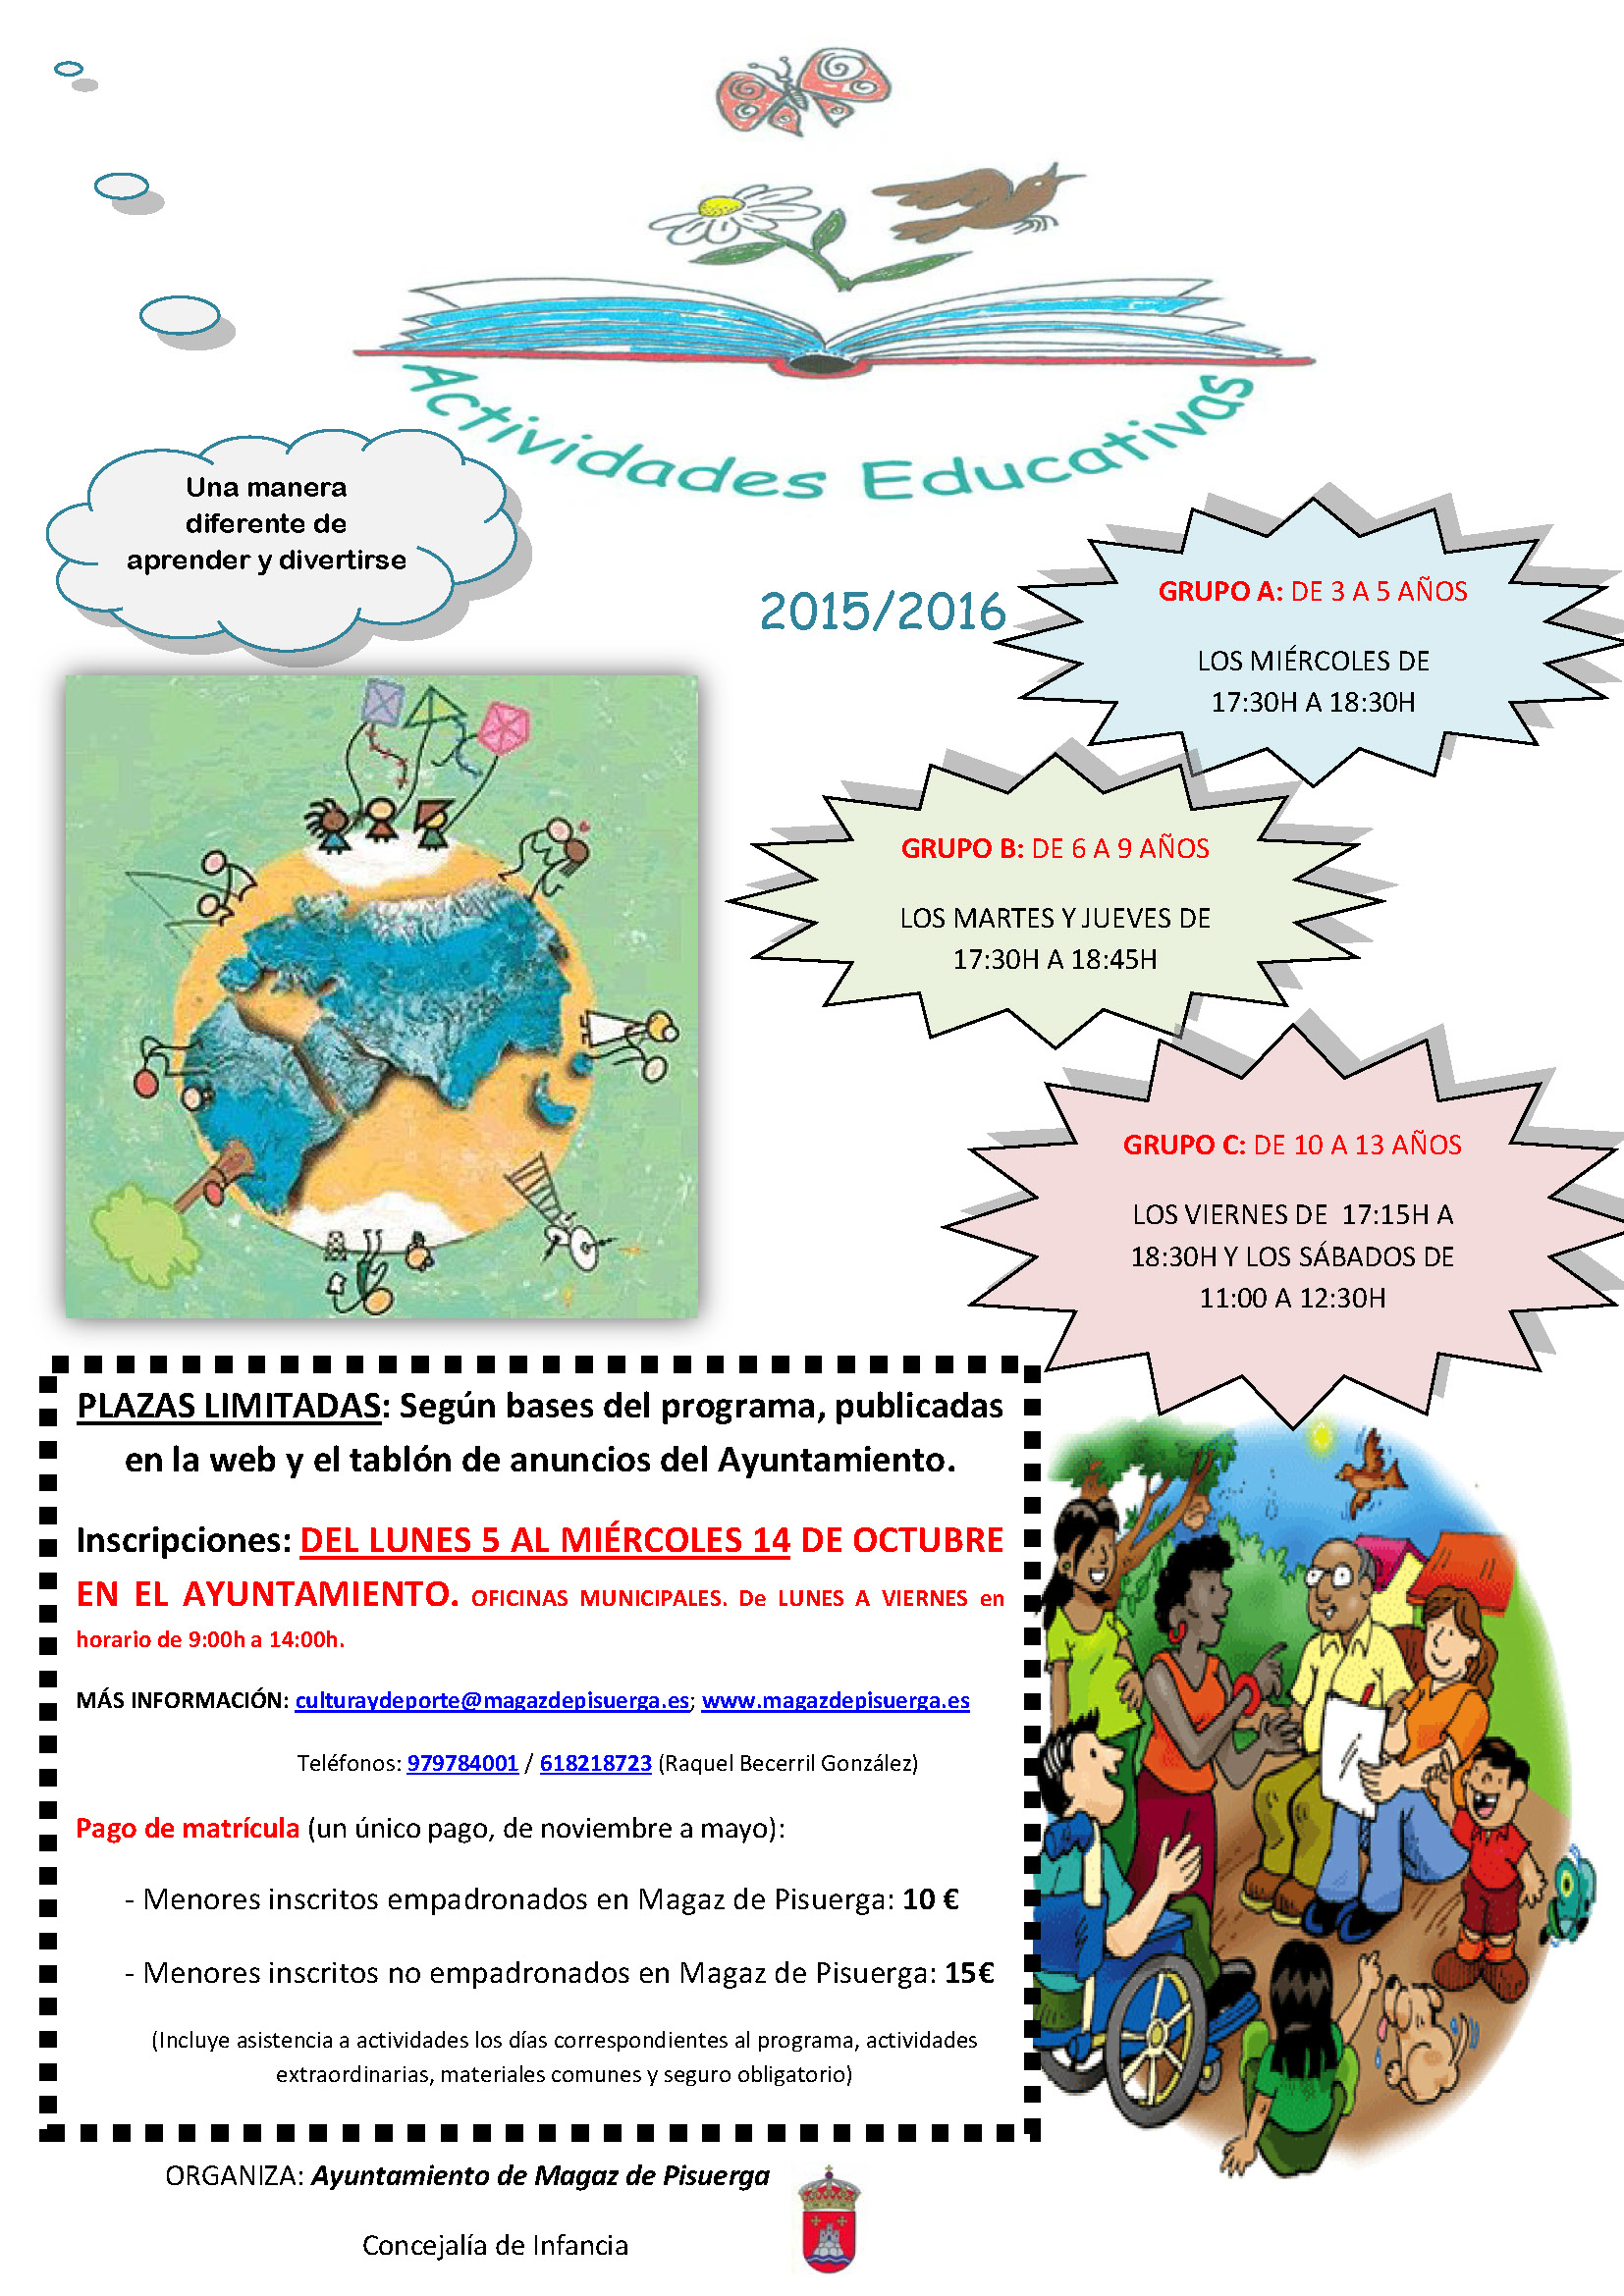 Programa de «Actividades educativas» destinadas a infancia-juventud